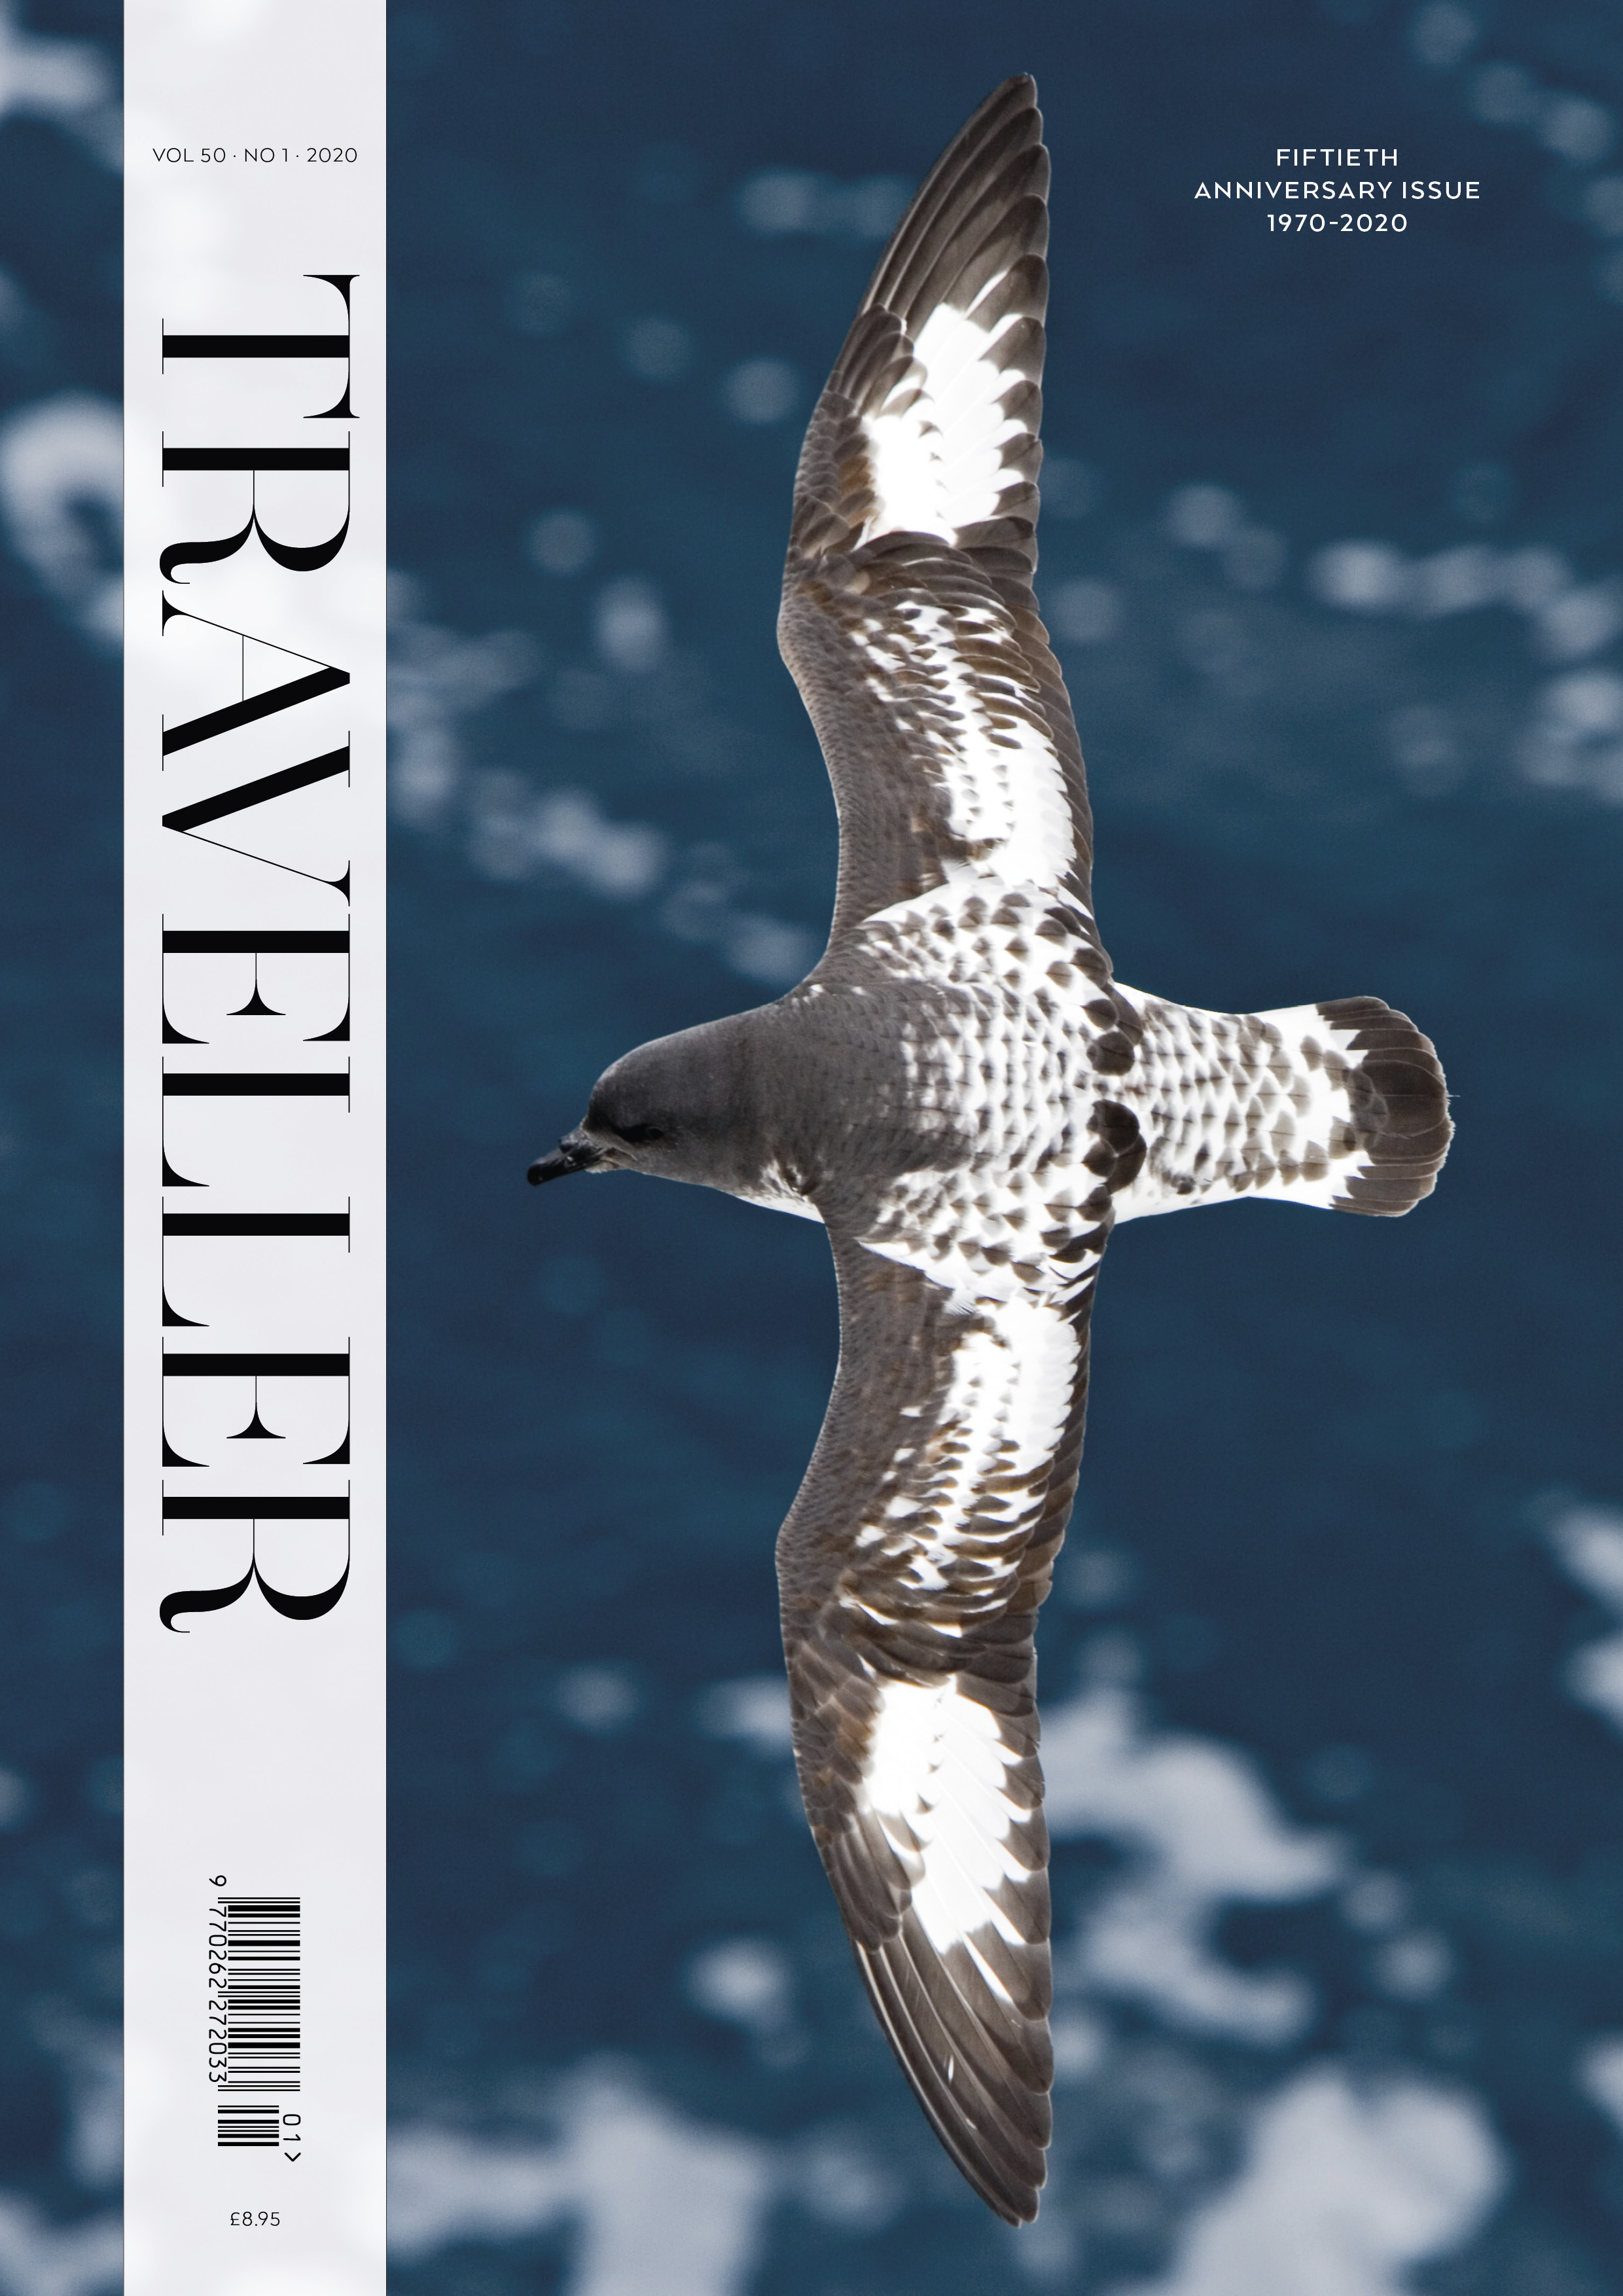 Traveller Magazine - Vol 50 No 1 2020 title